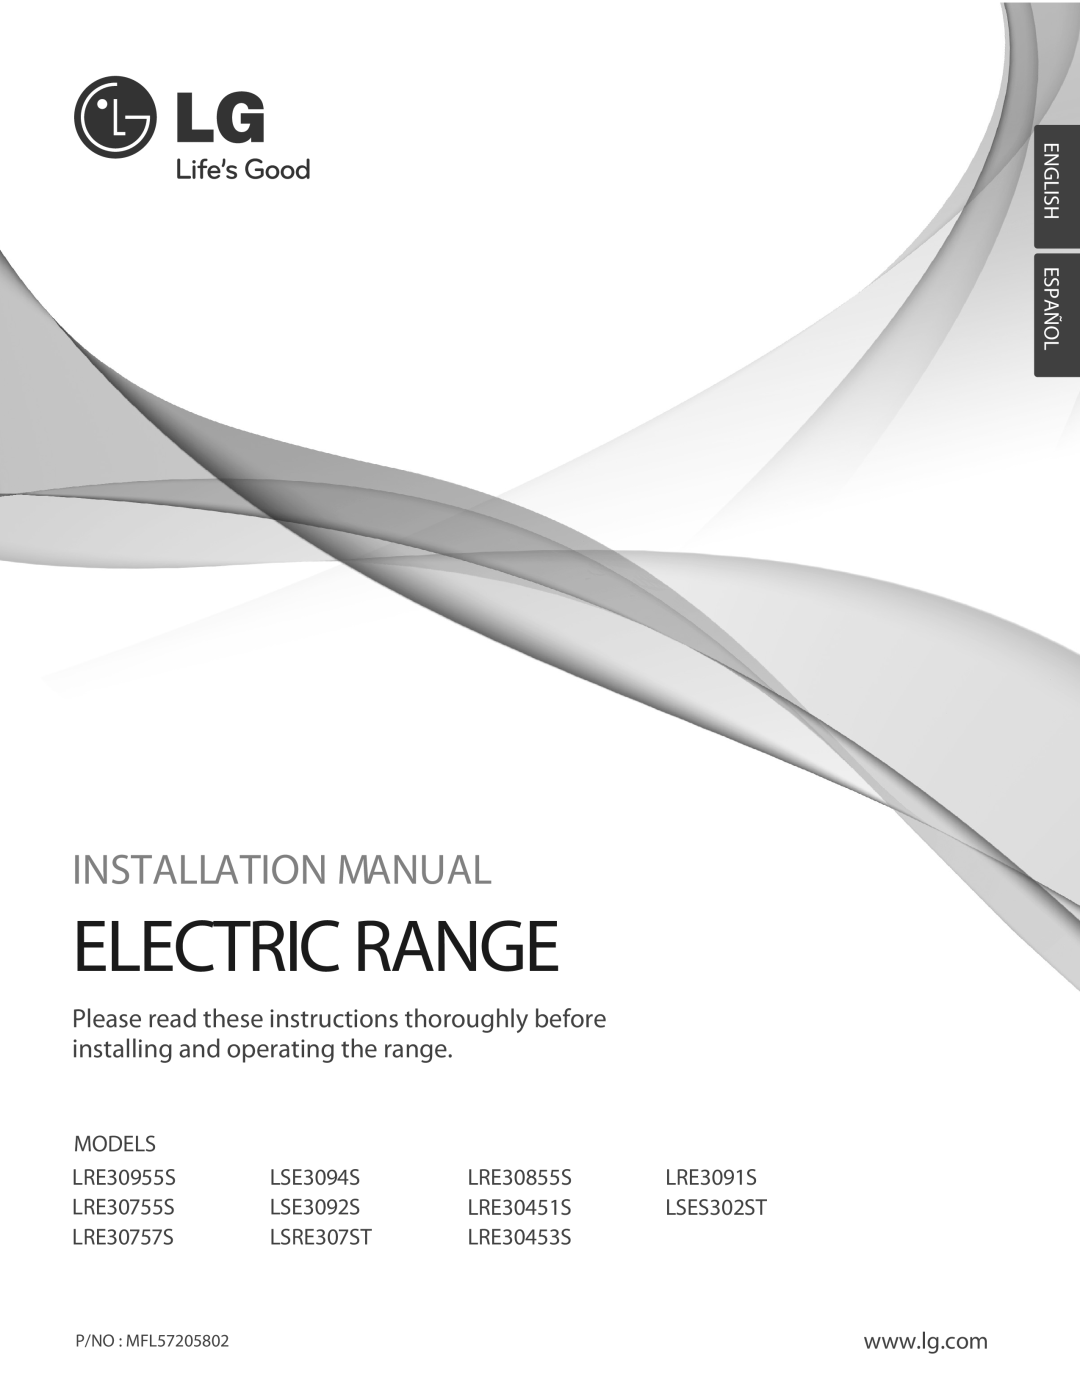 LG Electronics installation manual Electric Range, LRE30451S / LRE30755S, P/No. 3828W5U0512, Installation Manual 